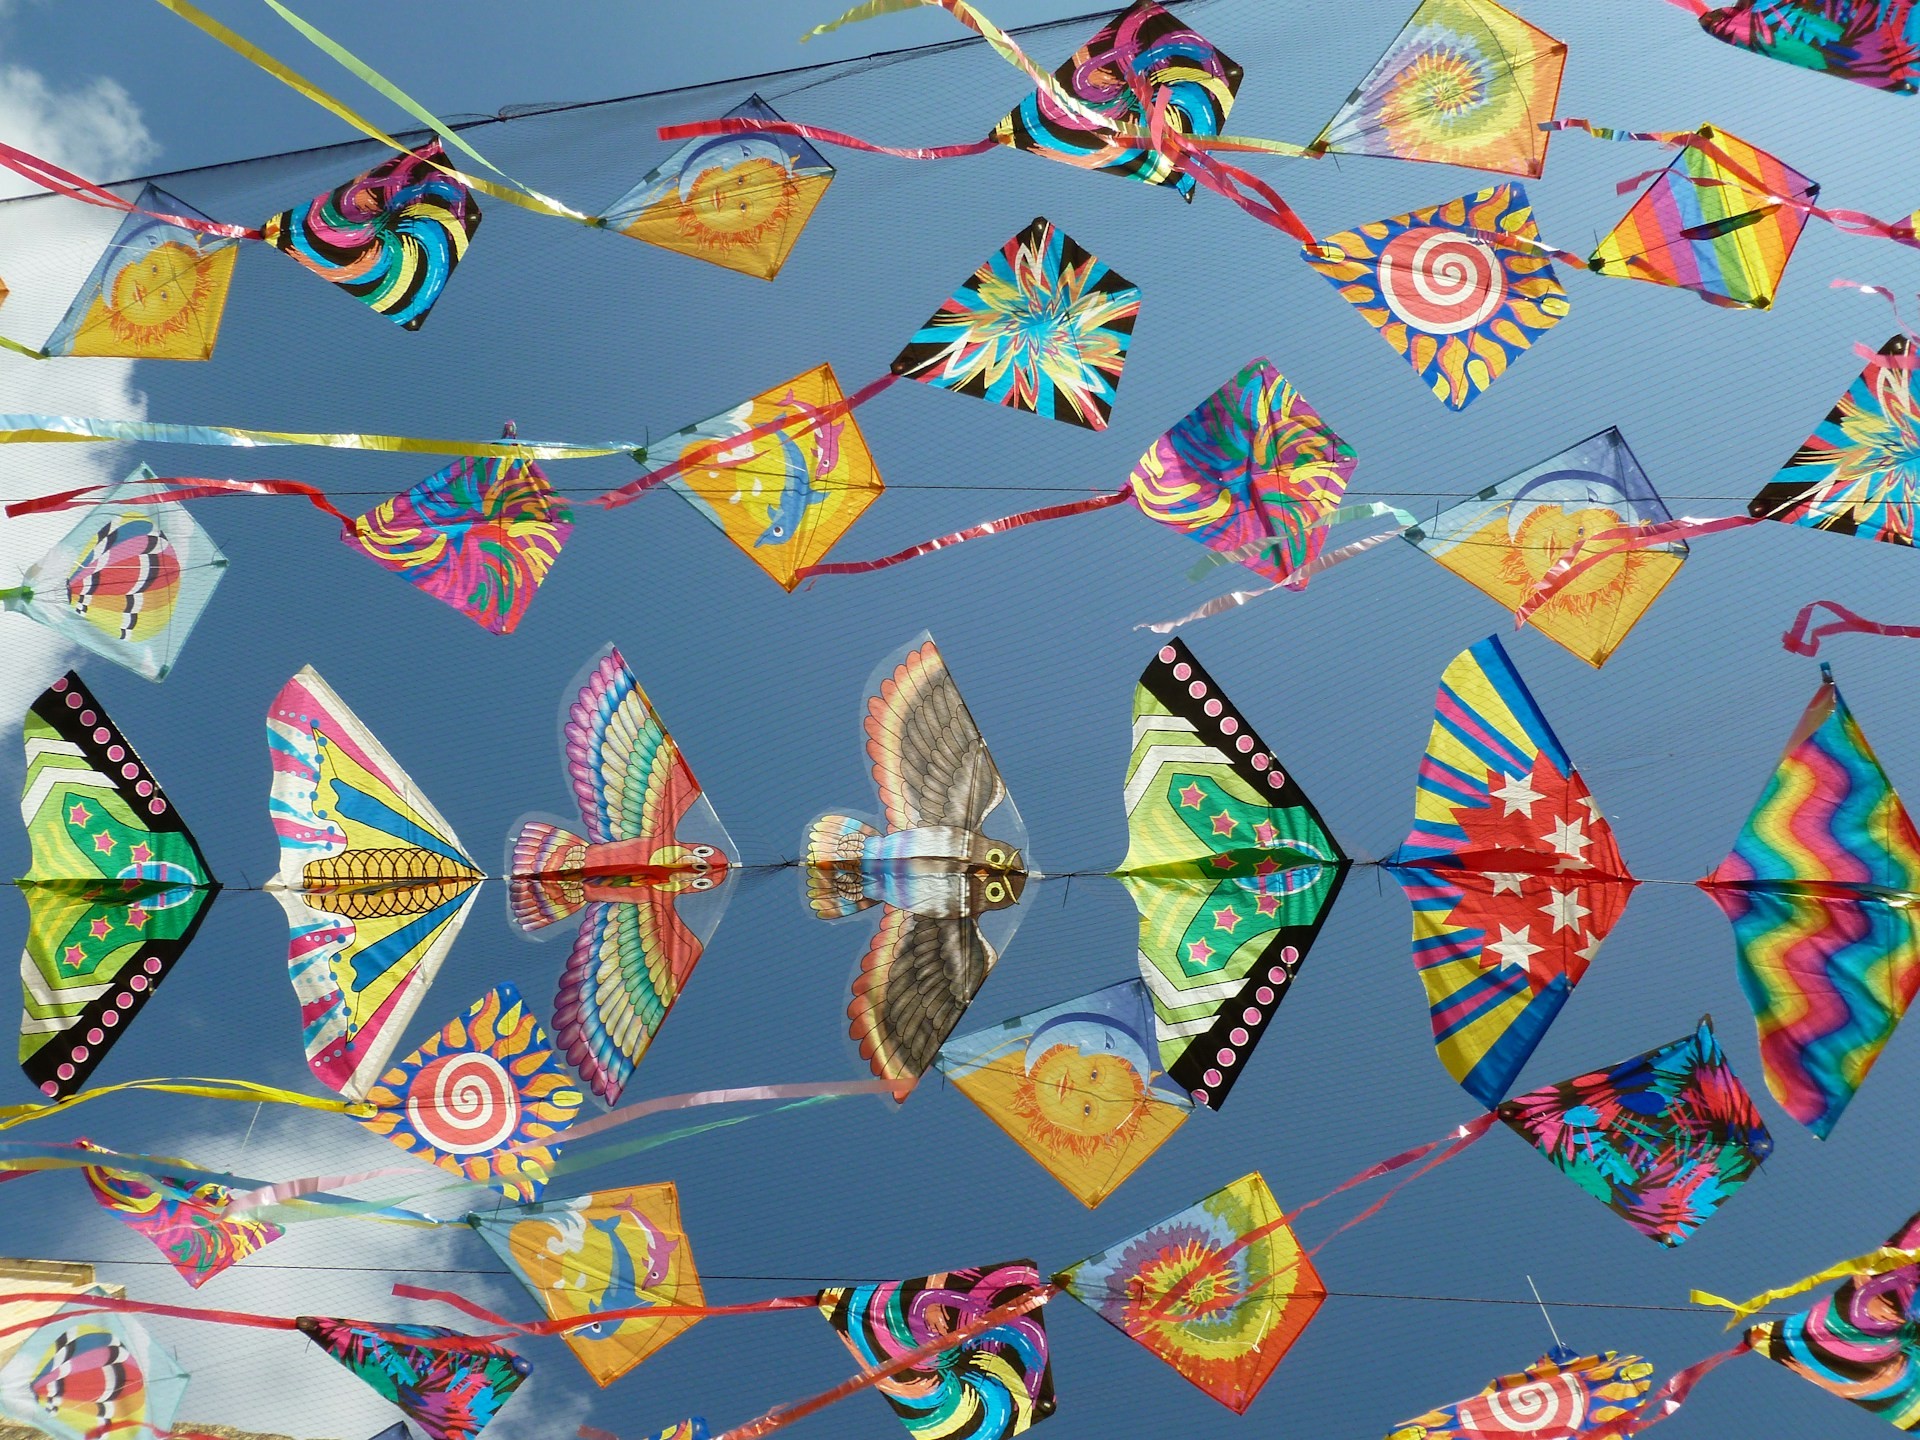 Antigua and Barbuda International Kite Festival